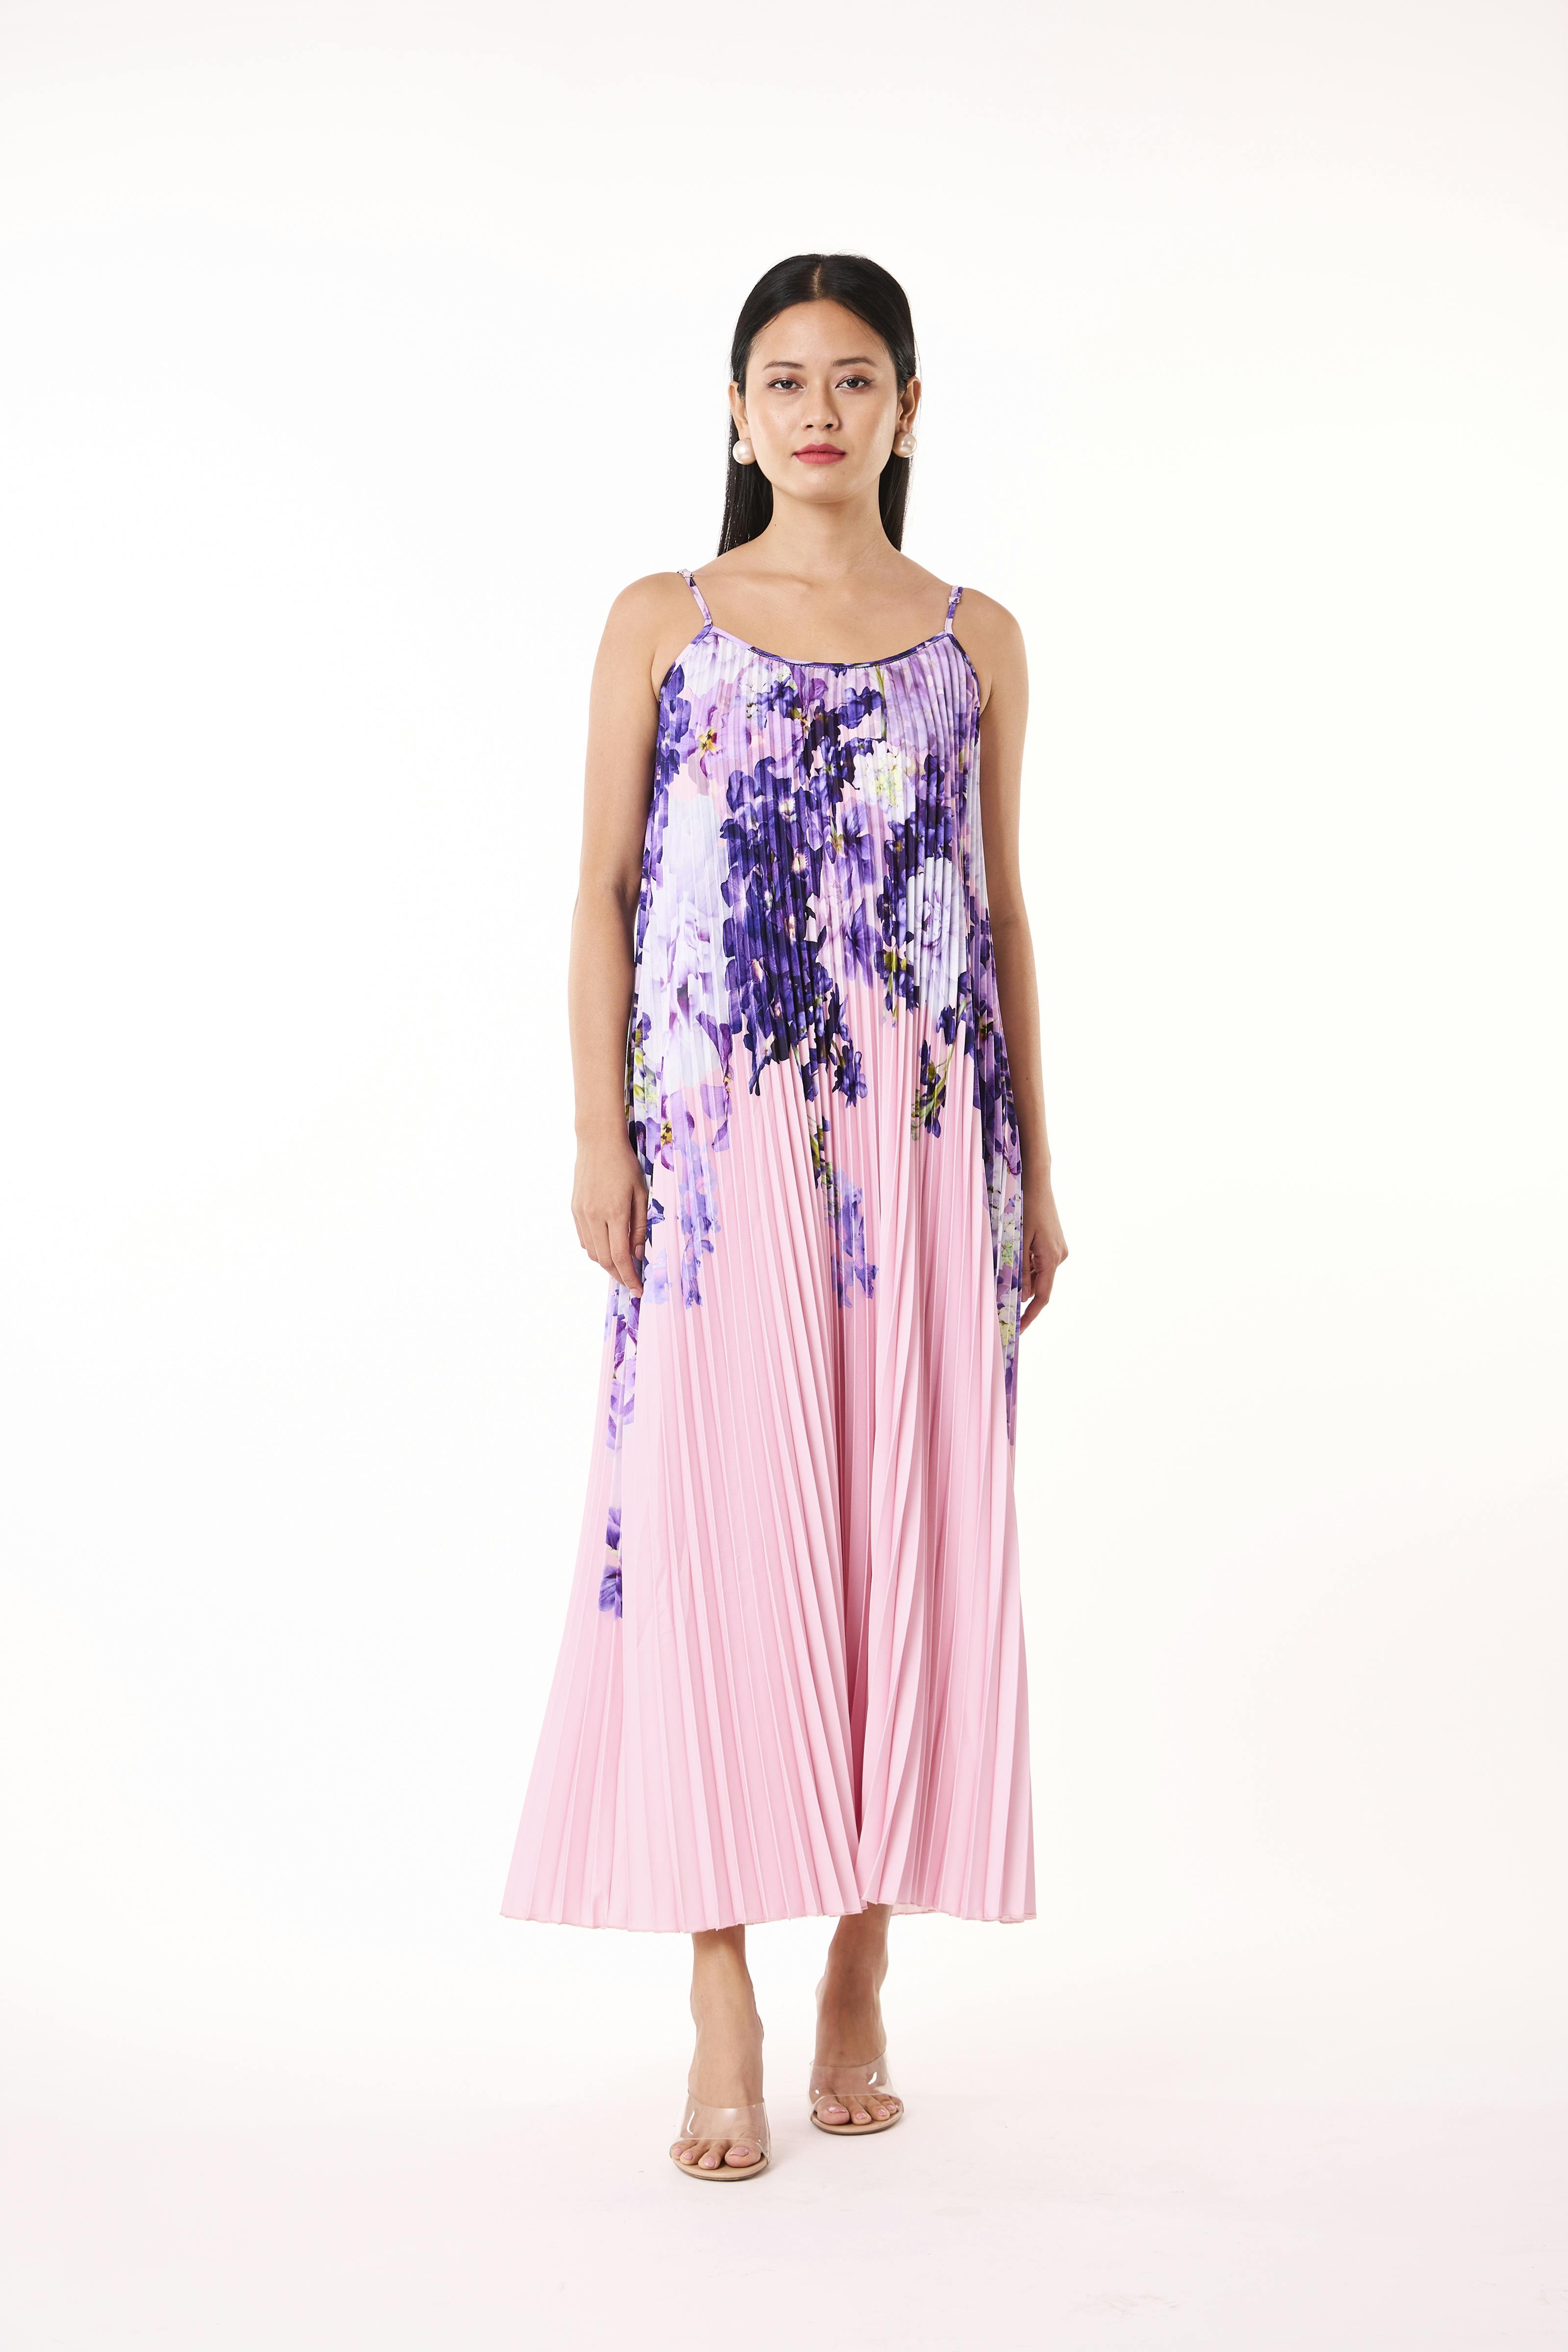 Olivia Floral Slip Dress - Pink, a product by Scarlet Sage